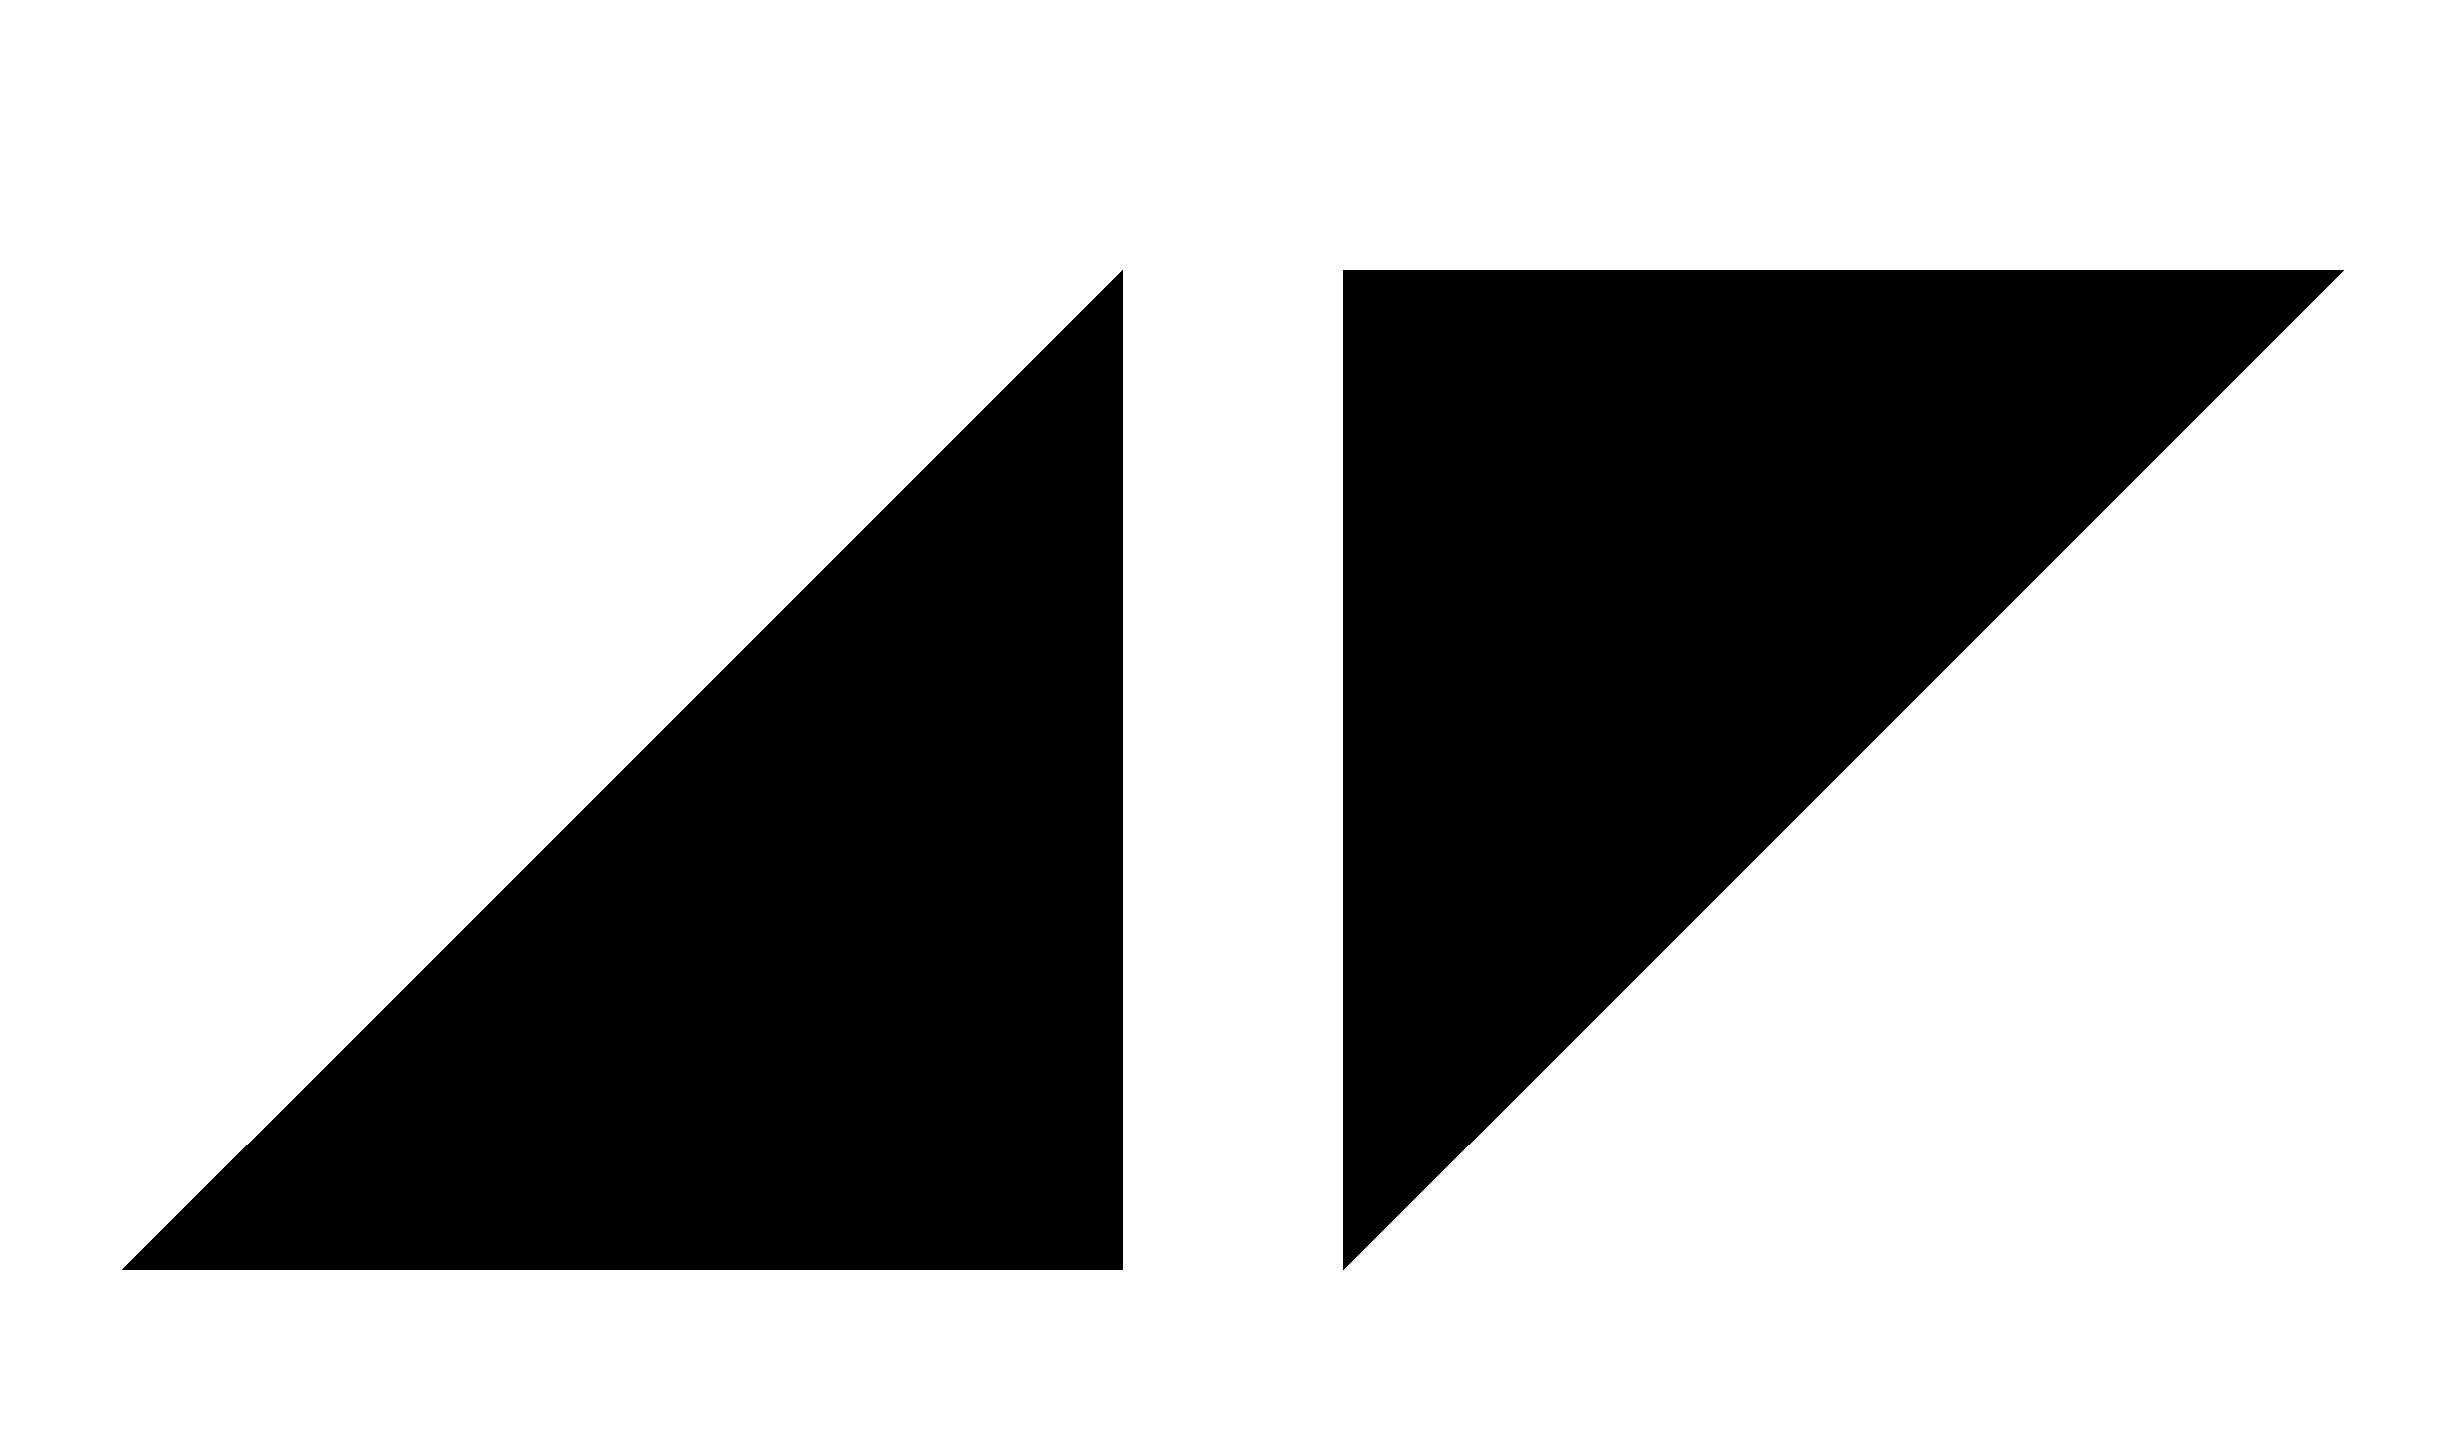 White and Black Triangle Logo - File:Avicii - Logo.png - Wikimedia Commons